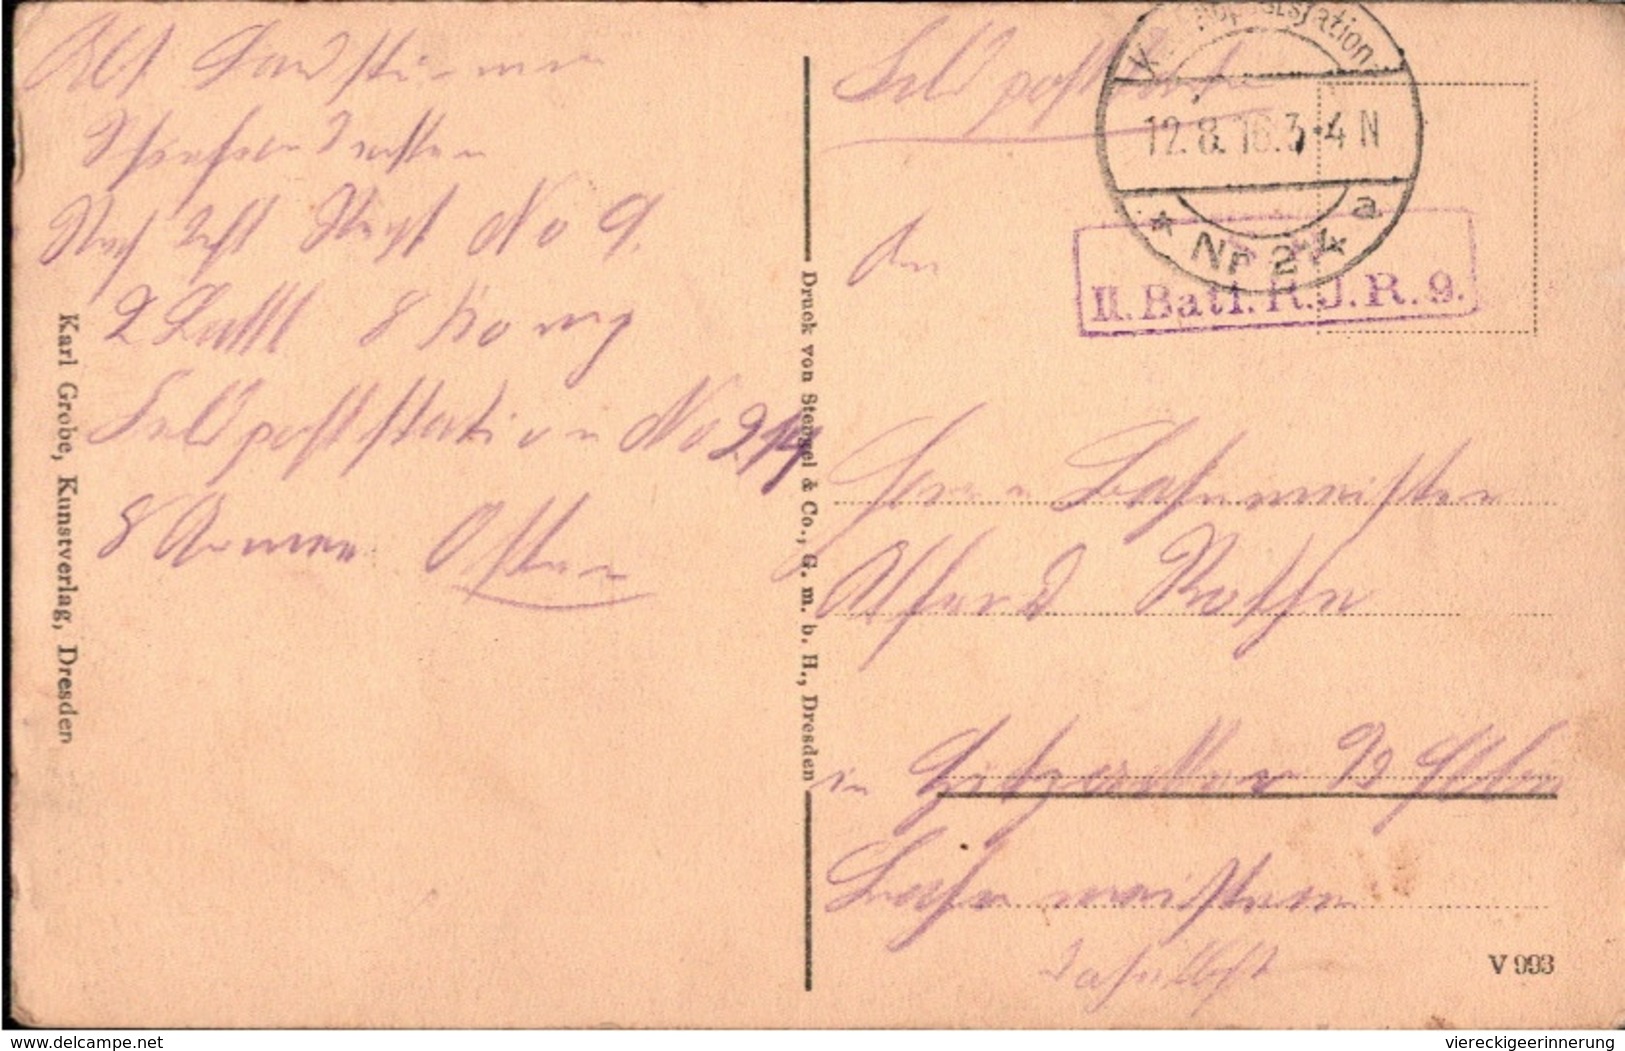 ! Ansichtskarte Gruß Aus Mitau, St. Johannis Kirche, Jelgava, 1916, Lettland - Lettland